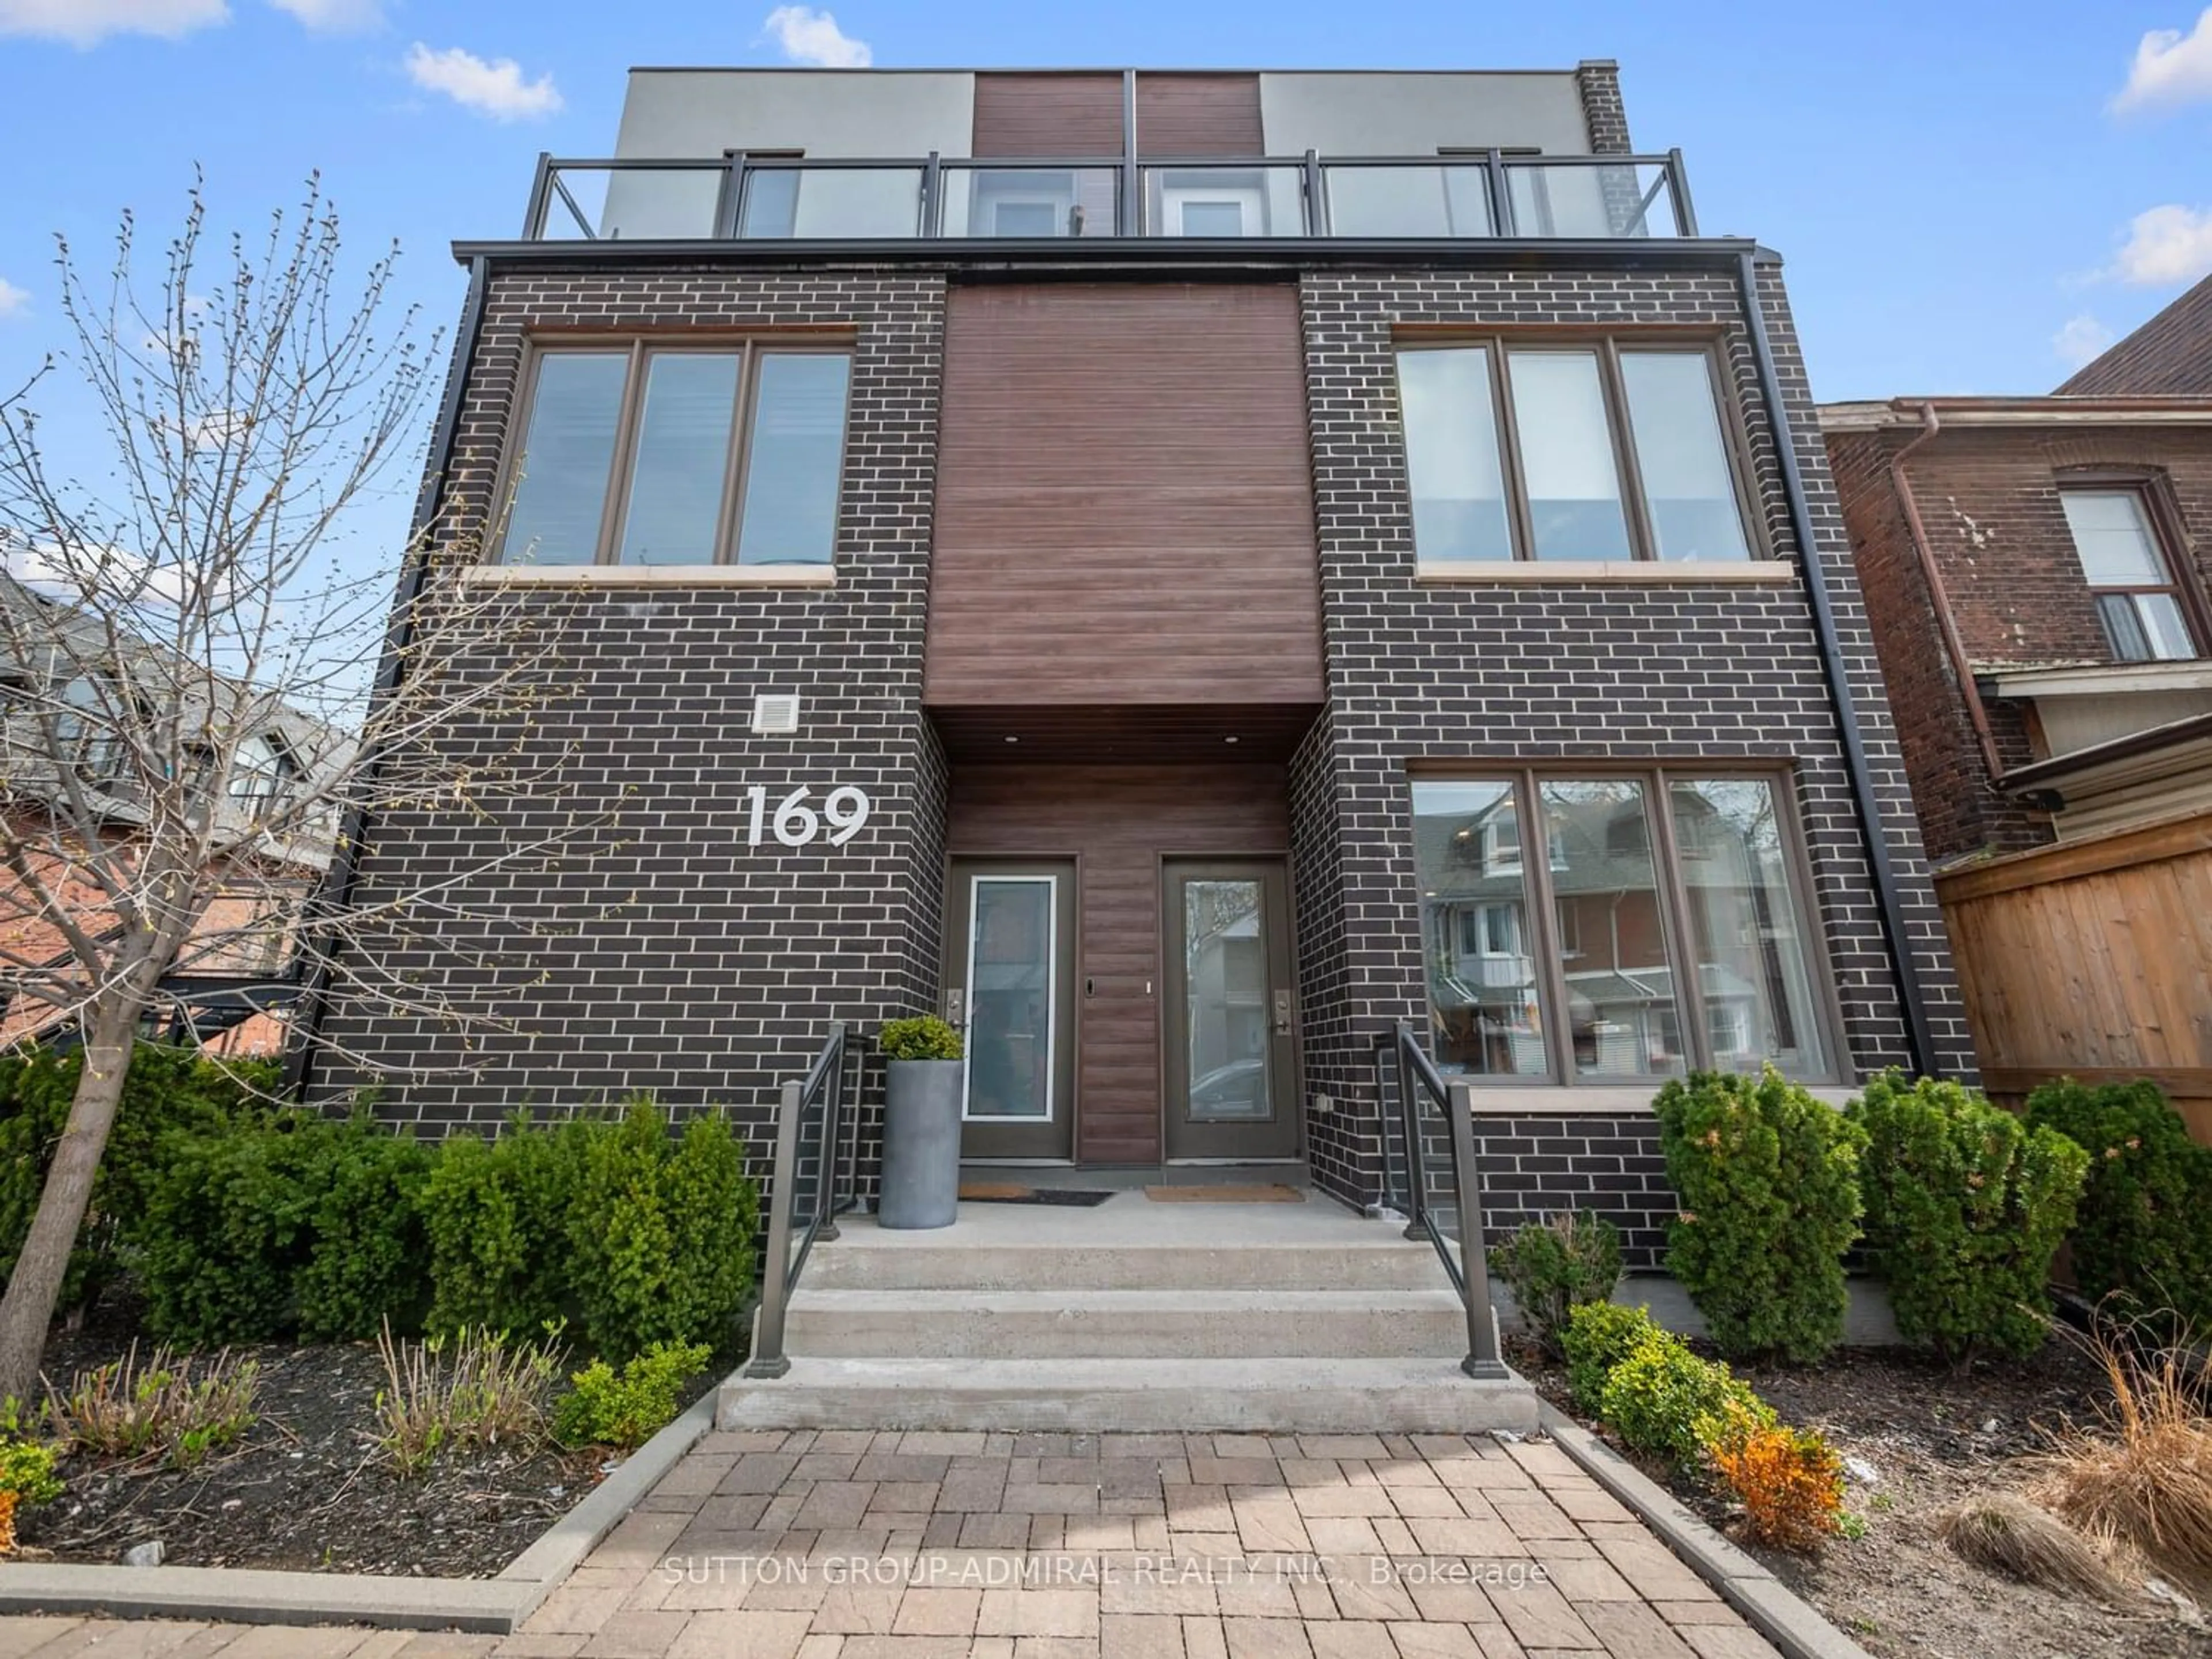 Home with brick exterior material for 169 Jones Ave #11, Toronto Ontario M4M 3A2